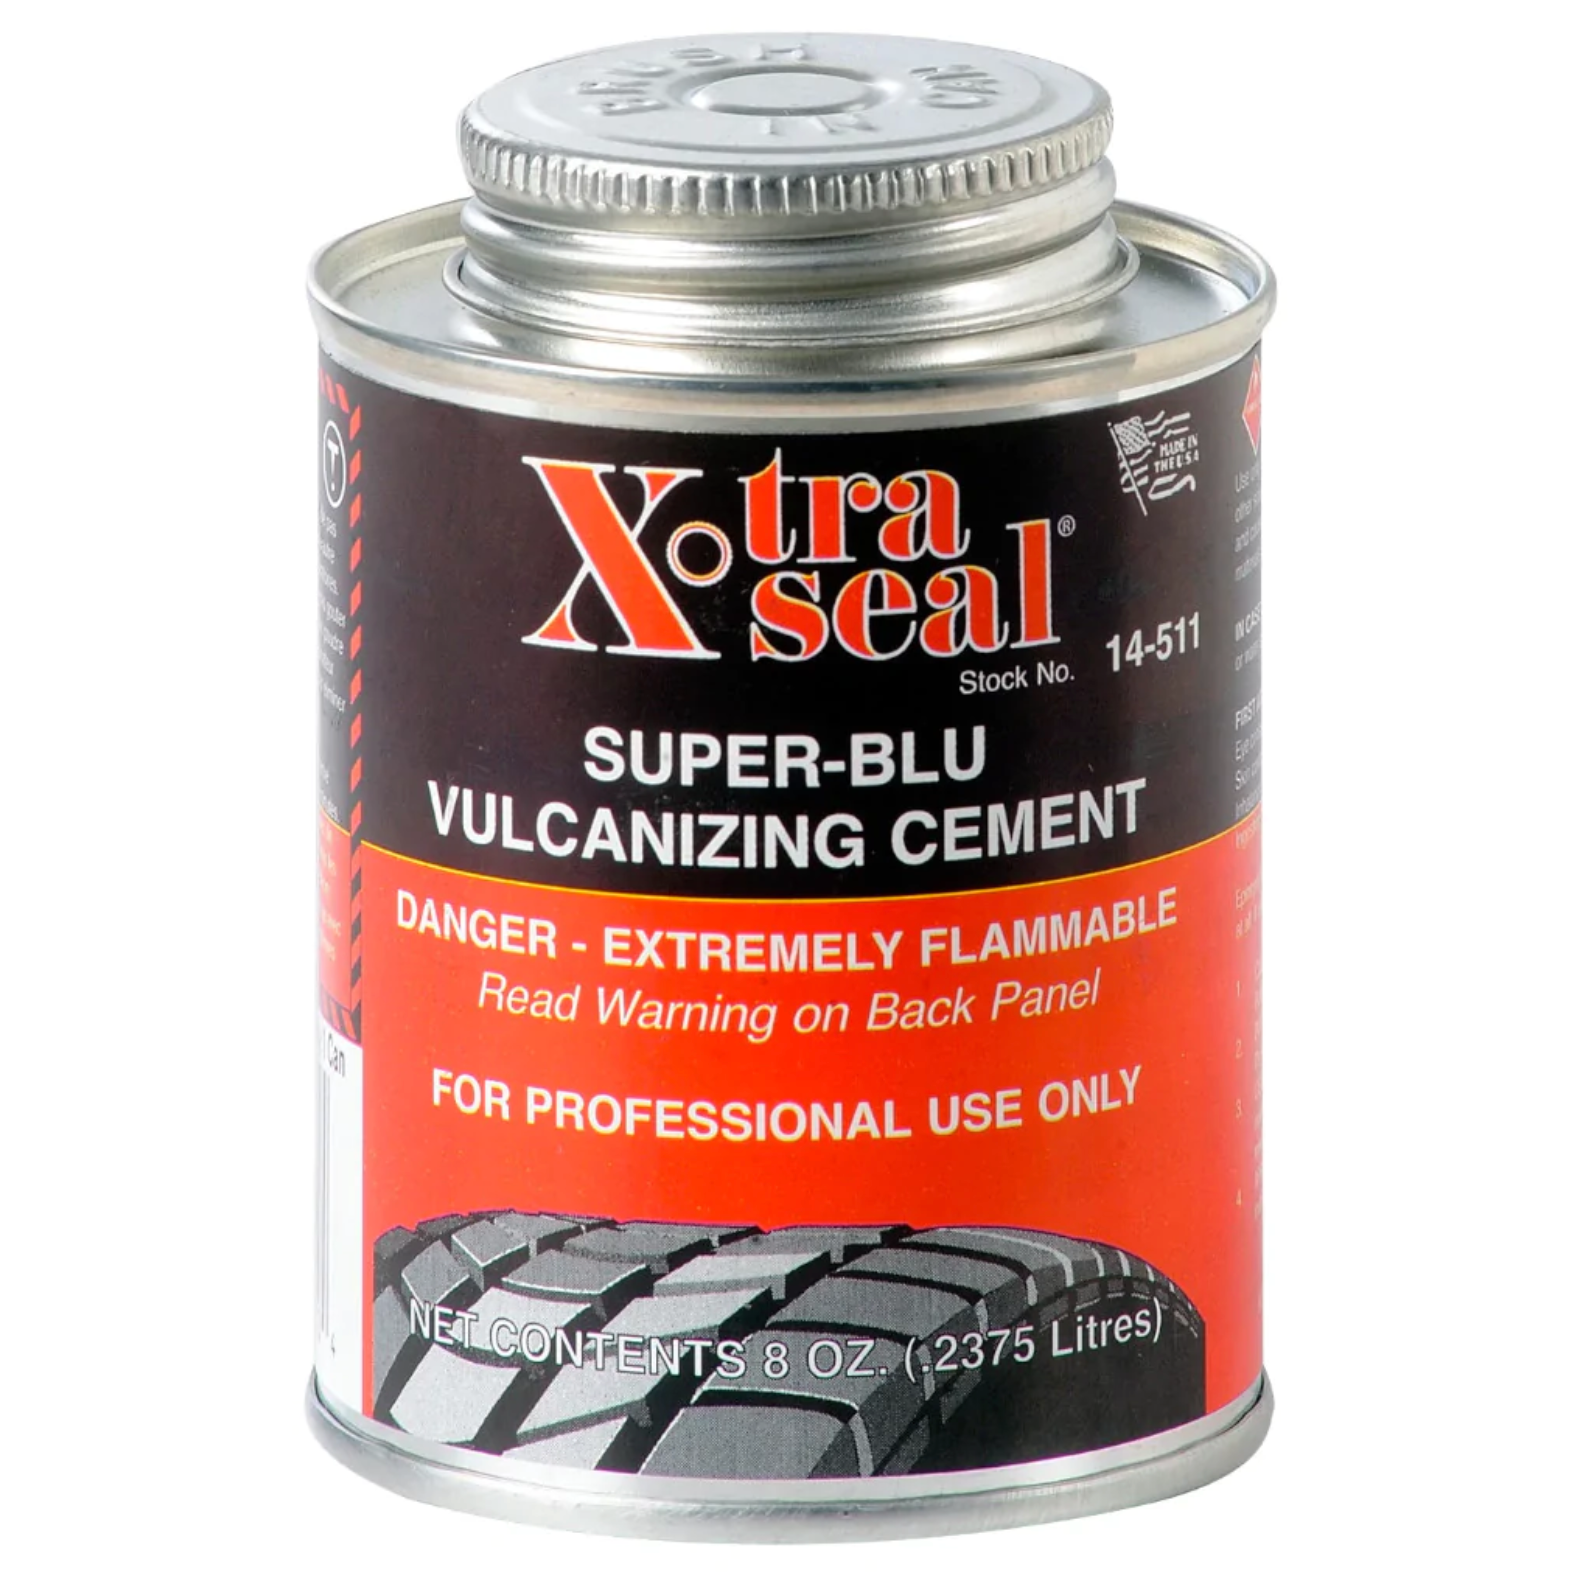 Xtra Seal Super-Blu Vulcanizing Cement Flammable